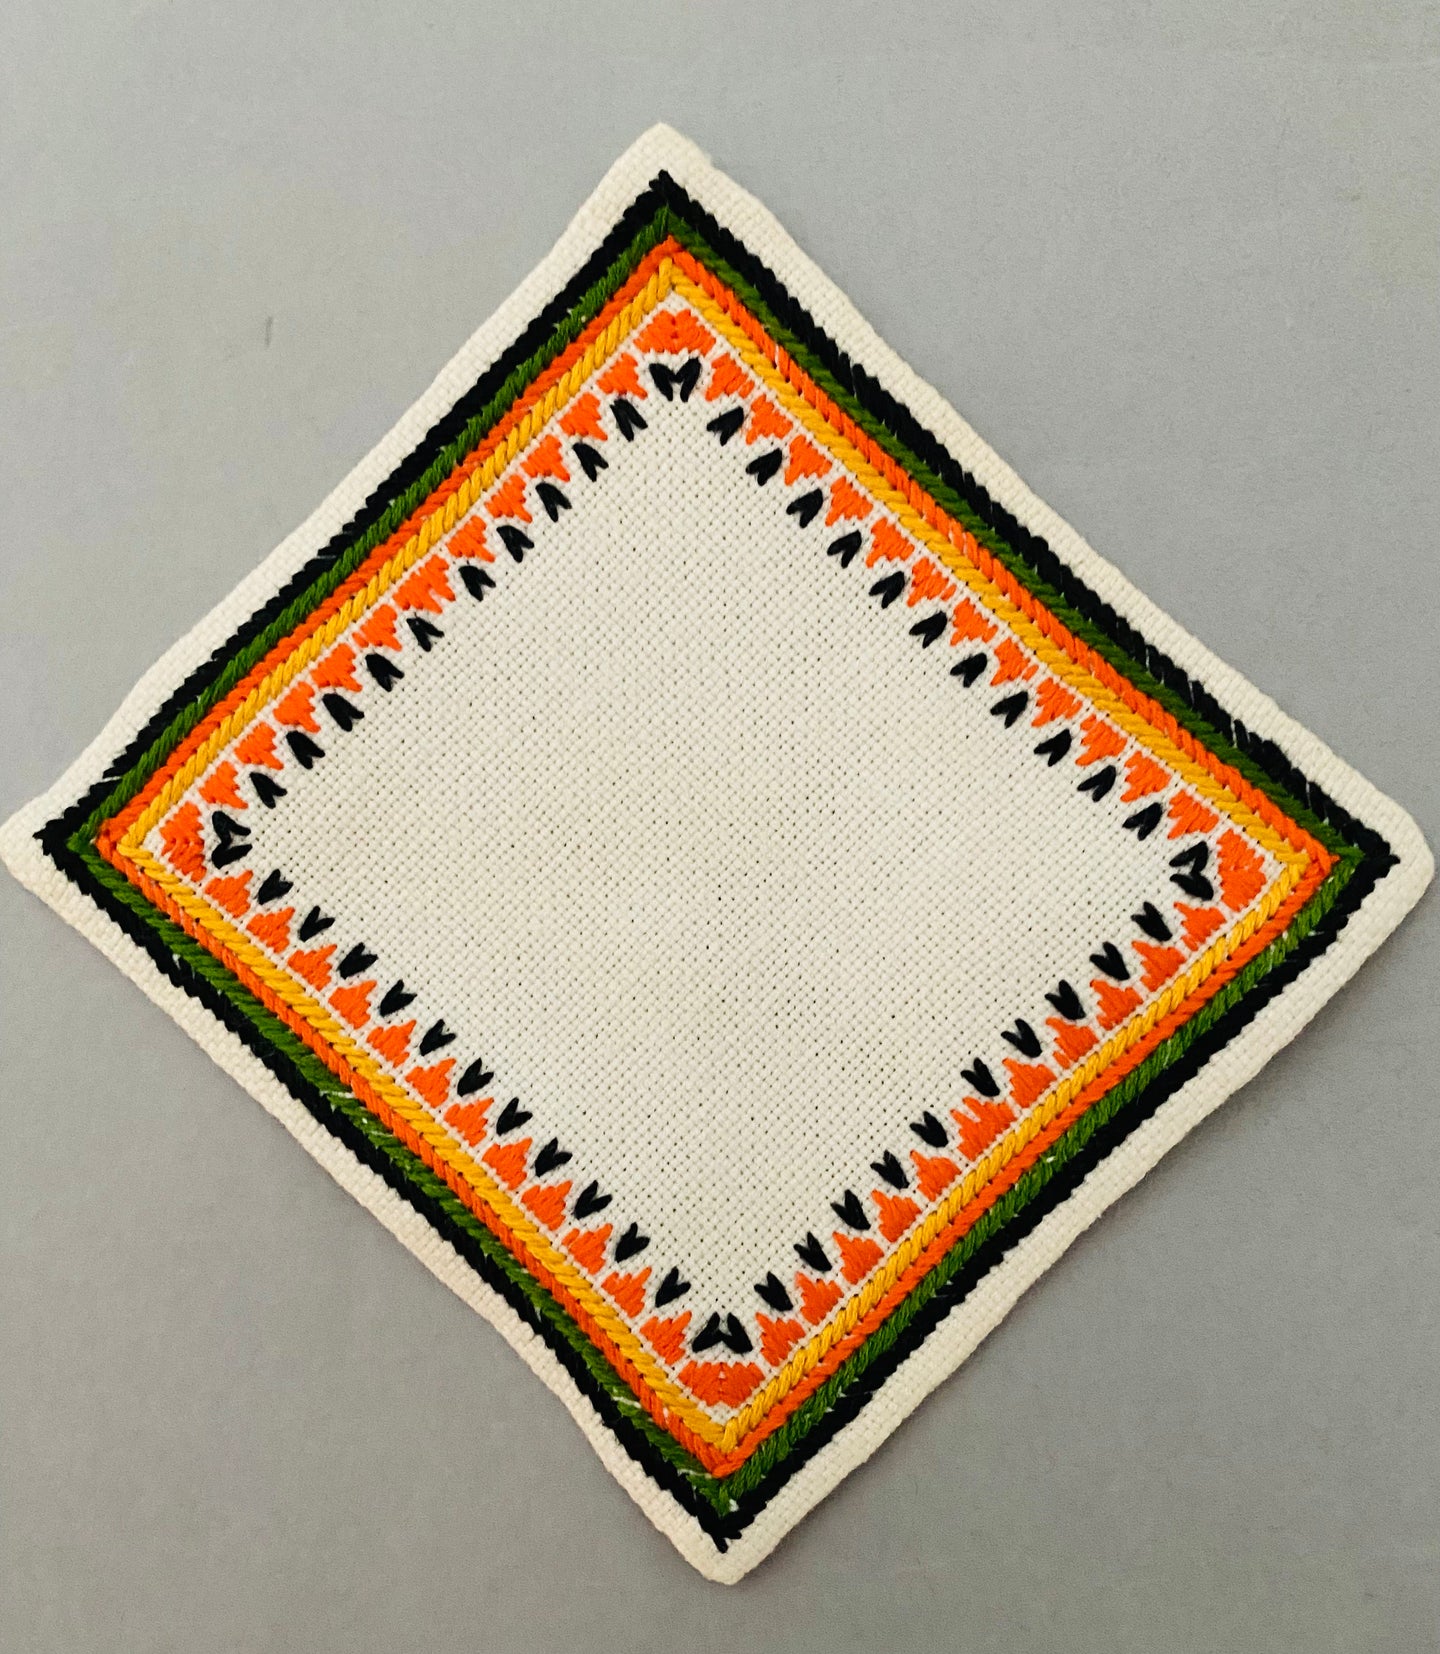 Embroidered  Servetka with nyzynka embroidery 4.5